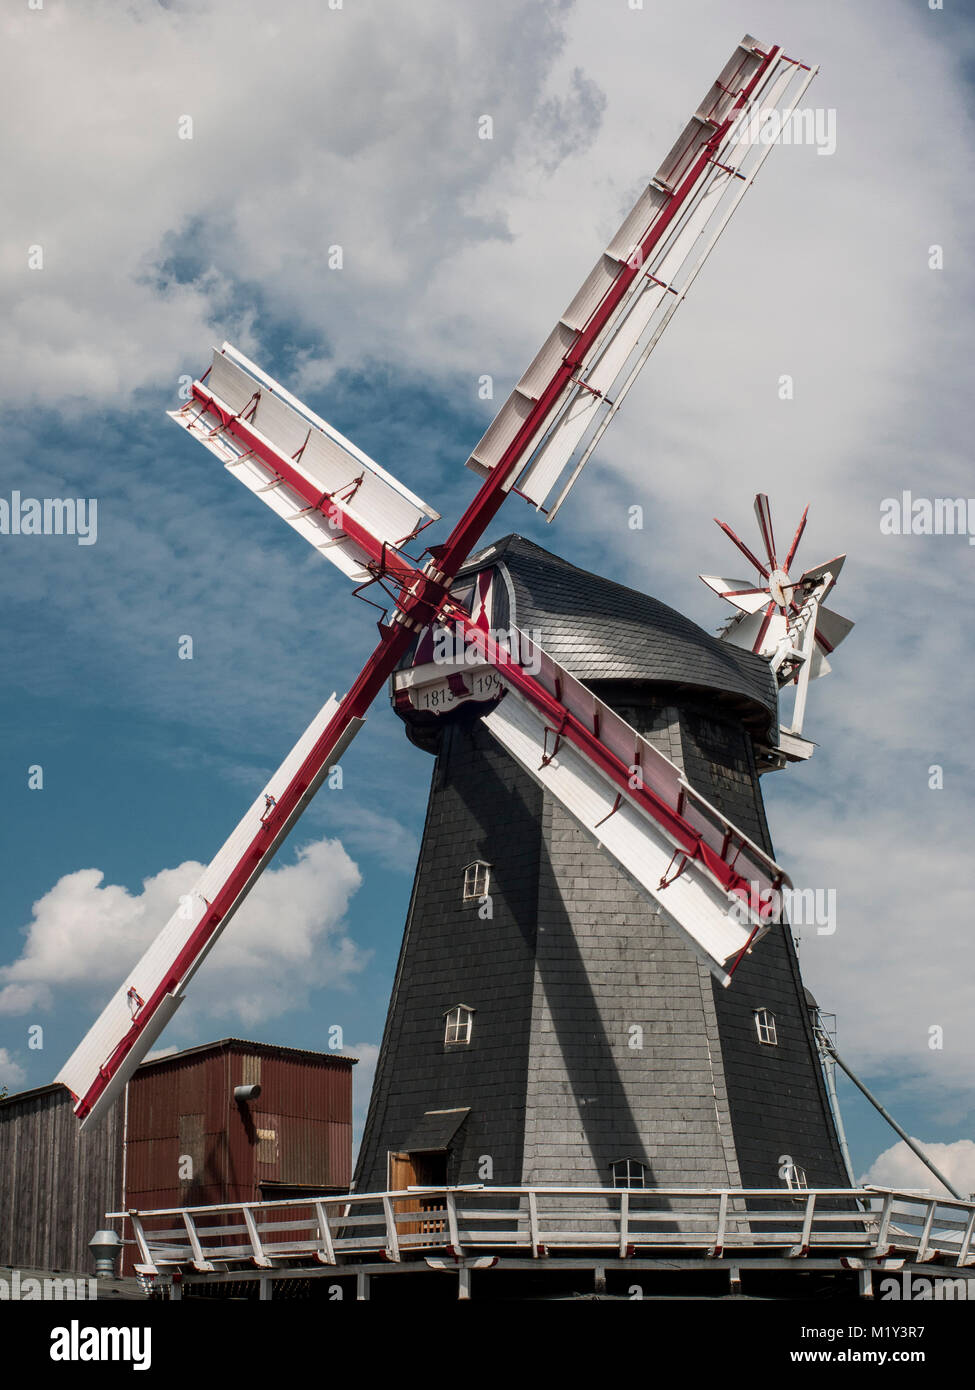 Historical Windmill in Bardowick, Niedersachsen, Germany. Stock Photo